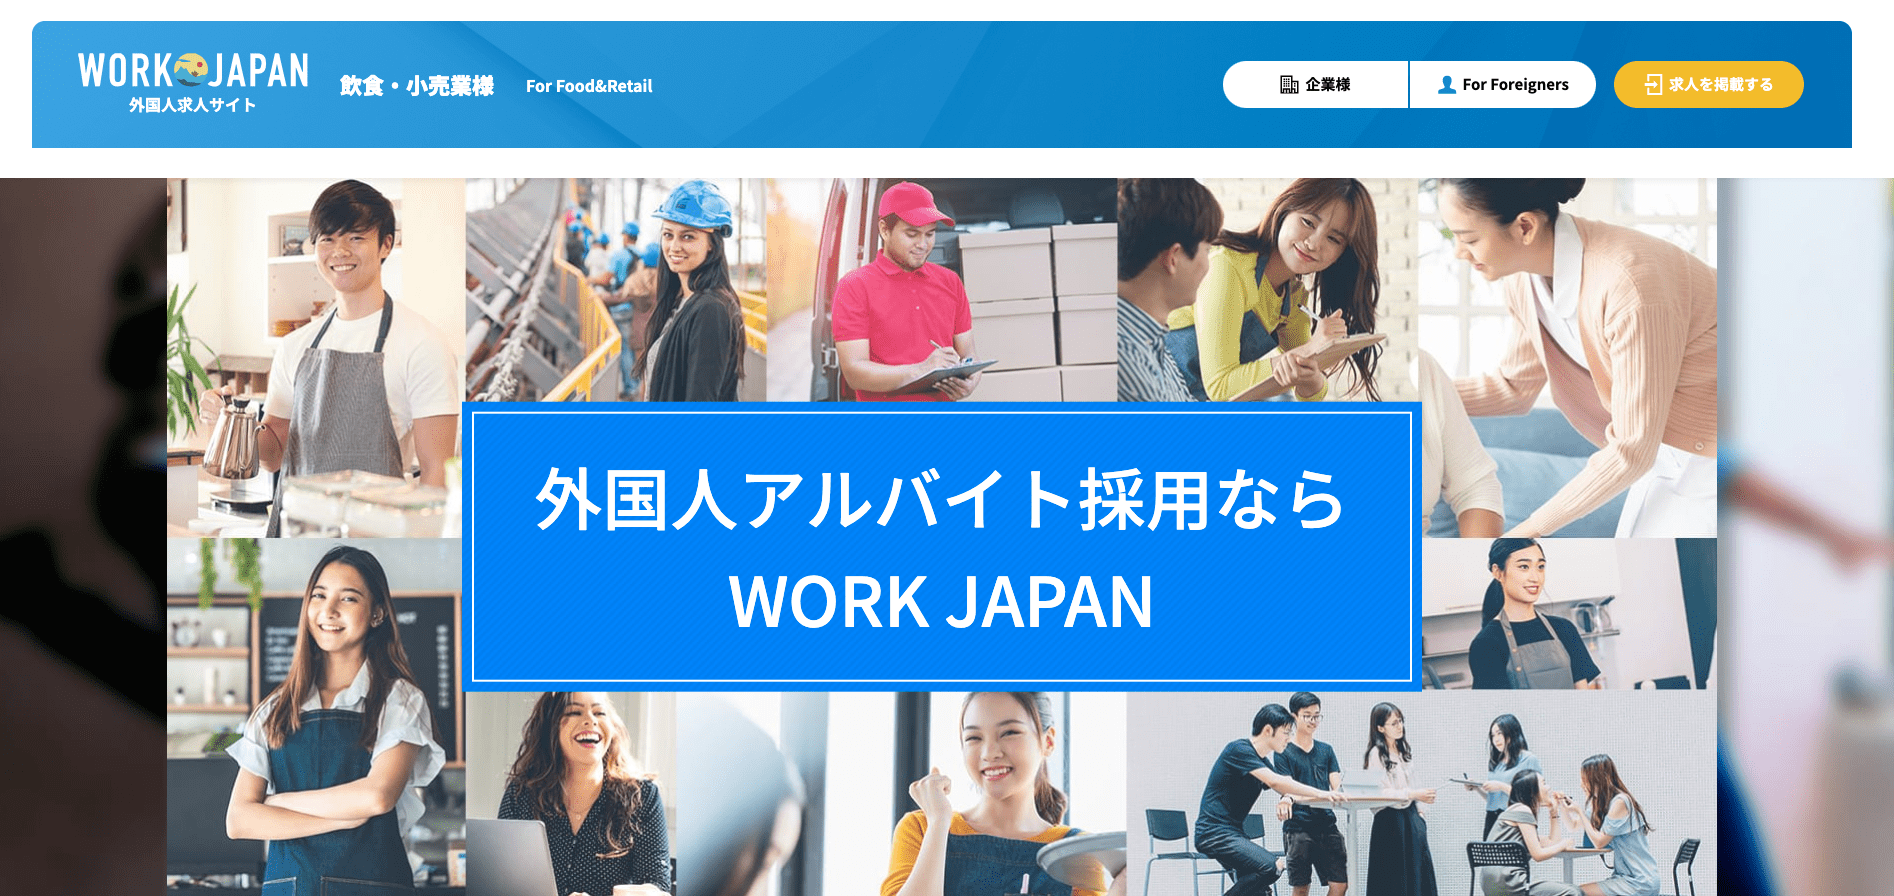 WORK JAPAN